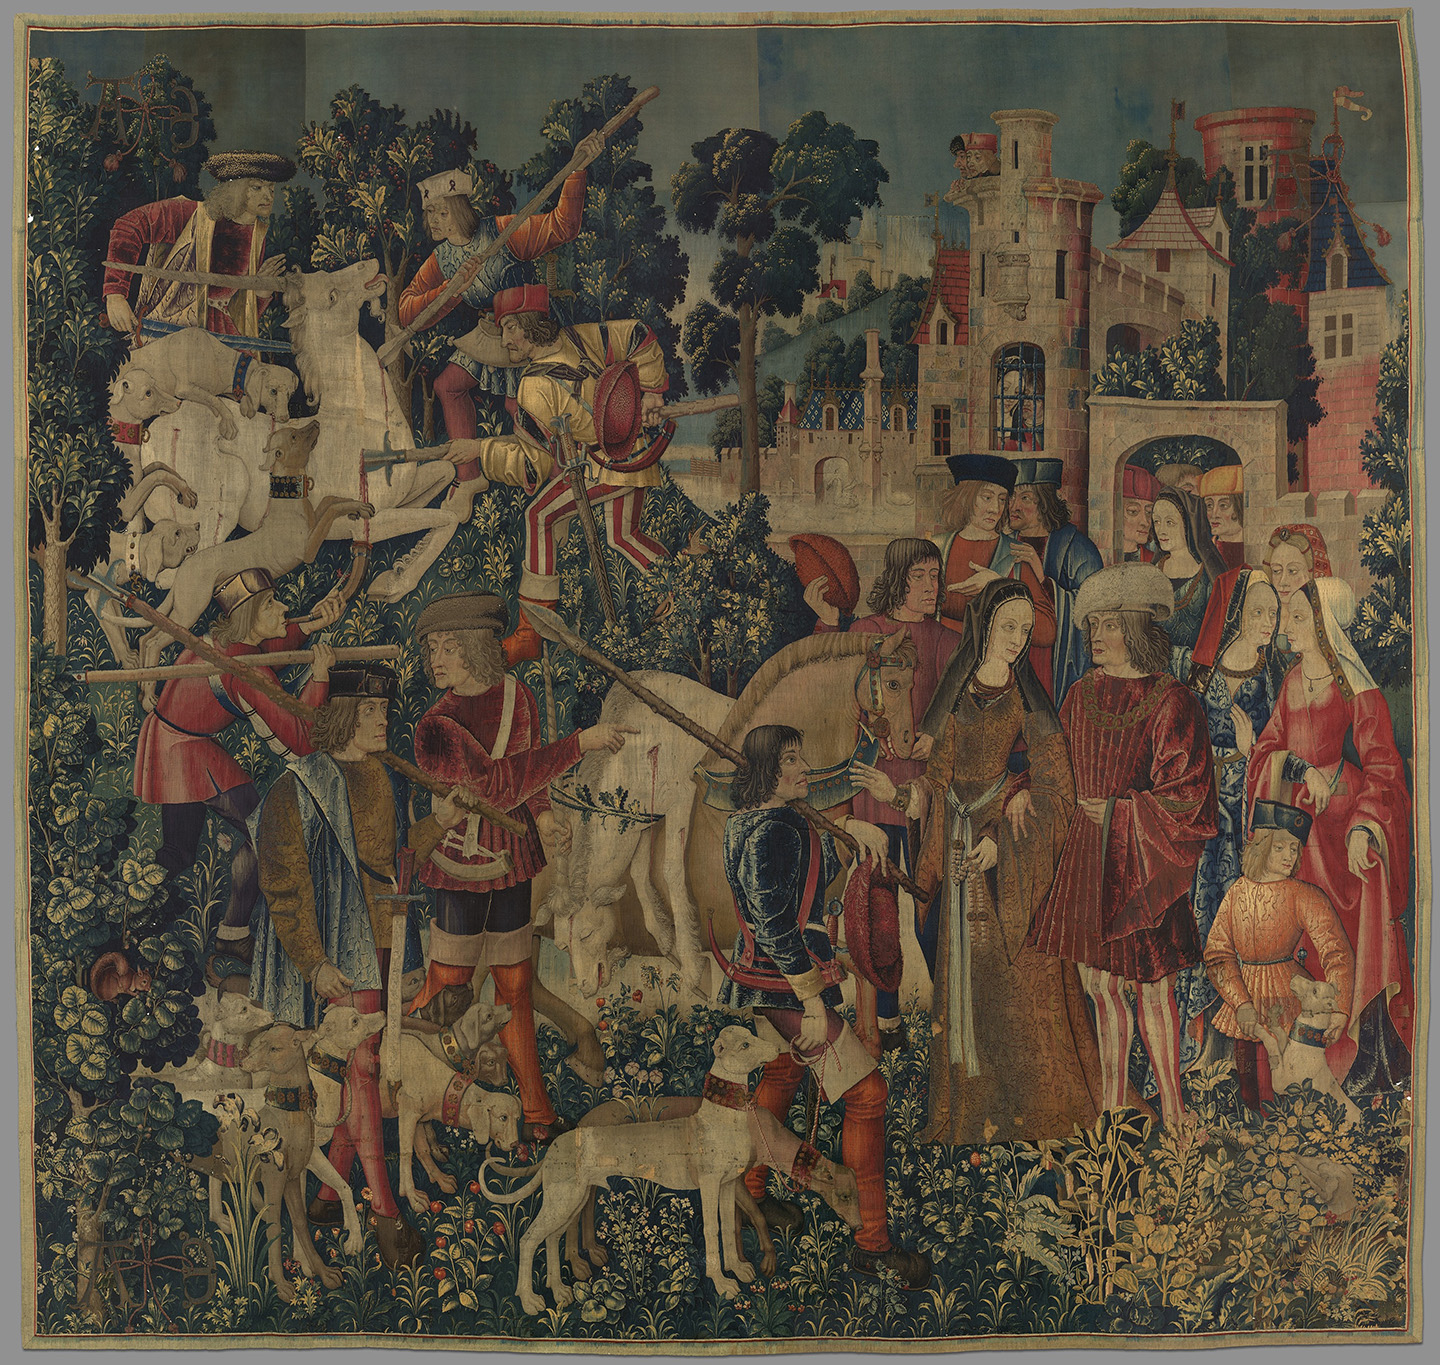 Unicorn Tapestry